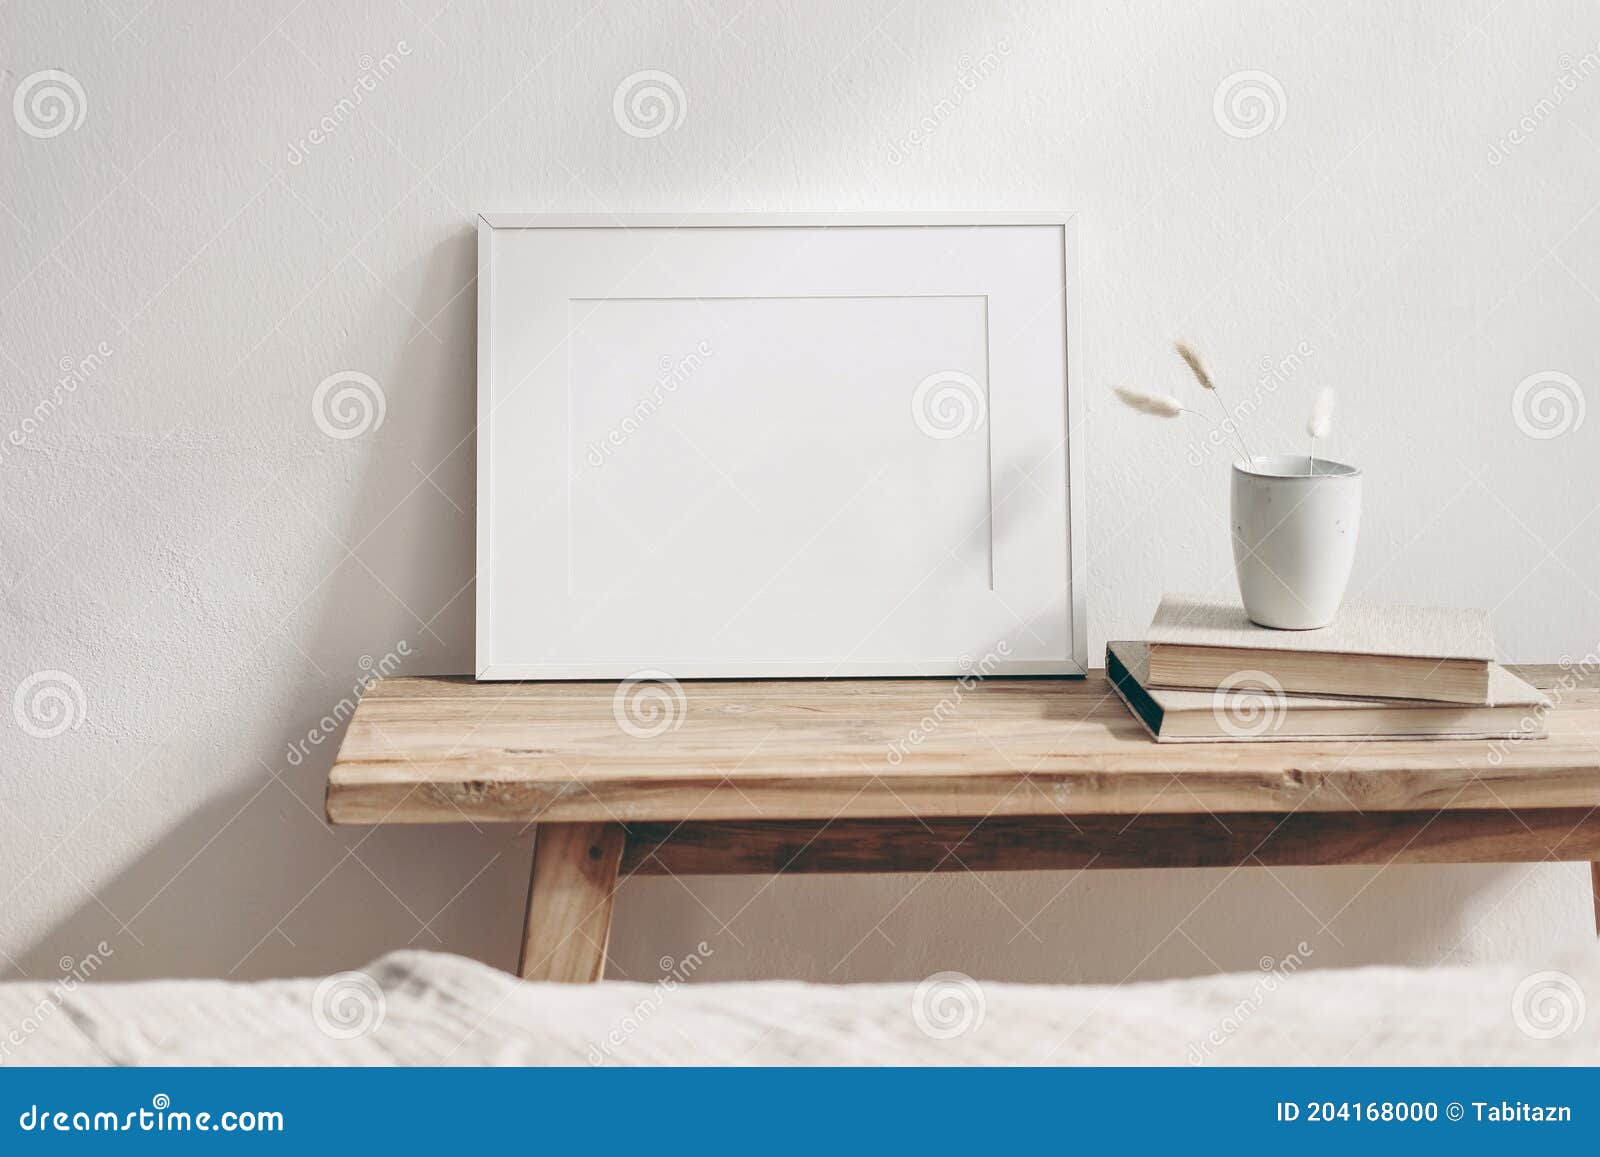 horizontal white frame mockup on vintage wooden bench, table. ceramic mug with dry lagurus ovatus grass and books. white